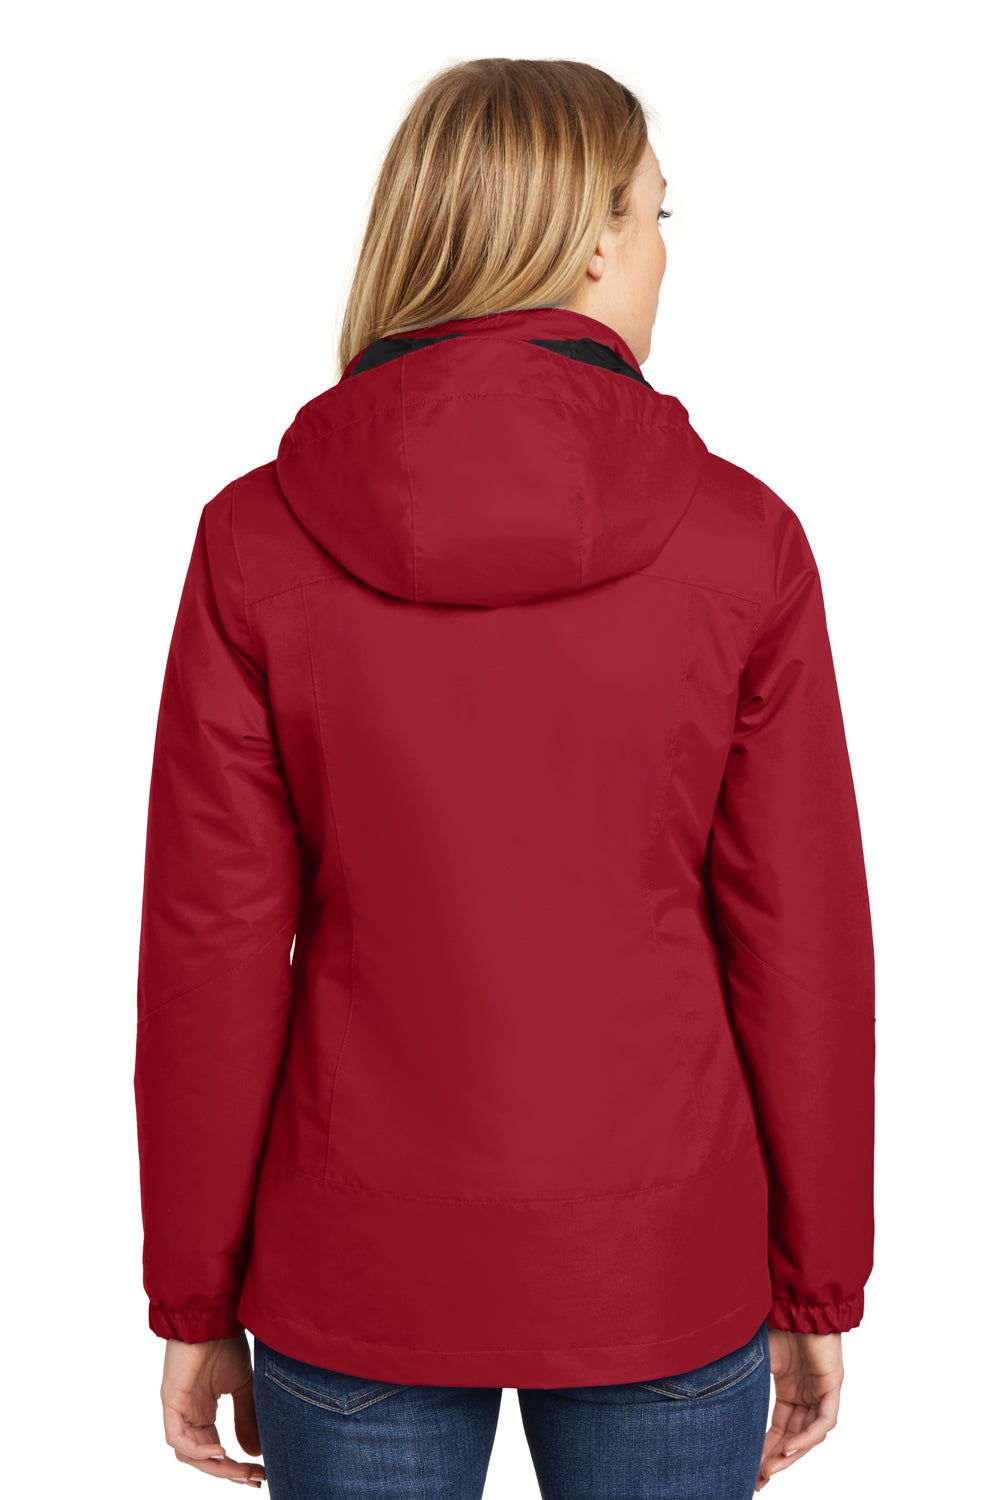 Port Authority L332 Womens Vortex 3-in-1 Waterproof Full Zip Hooded Jacket Red/Black Back